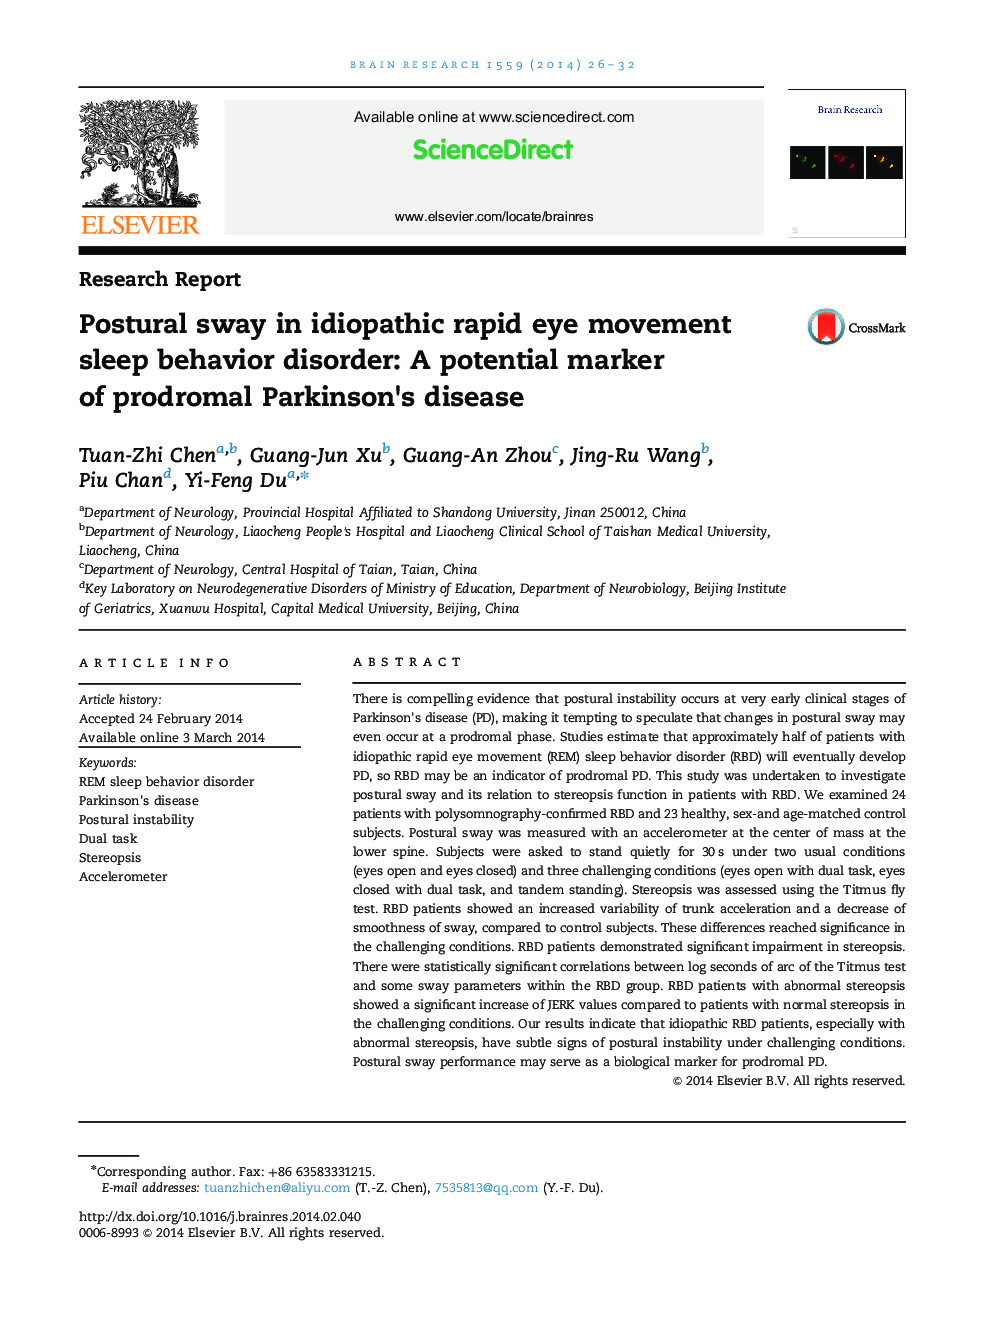 Postural sway in idiopathic rapid eye movement sleep behavior disorder: A potential marker of prodromal Parkinson׳s disease